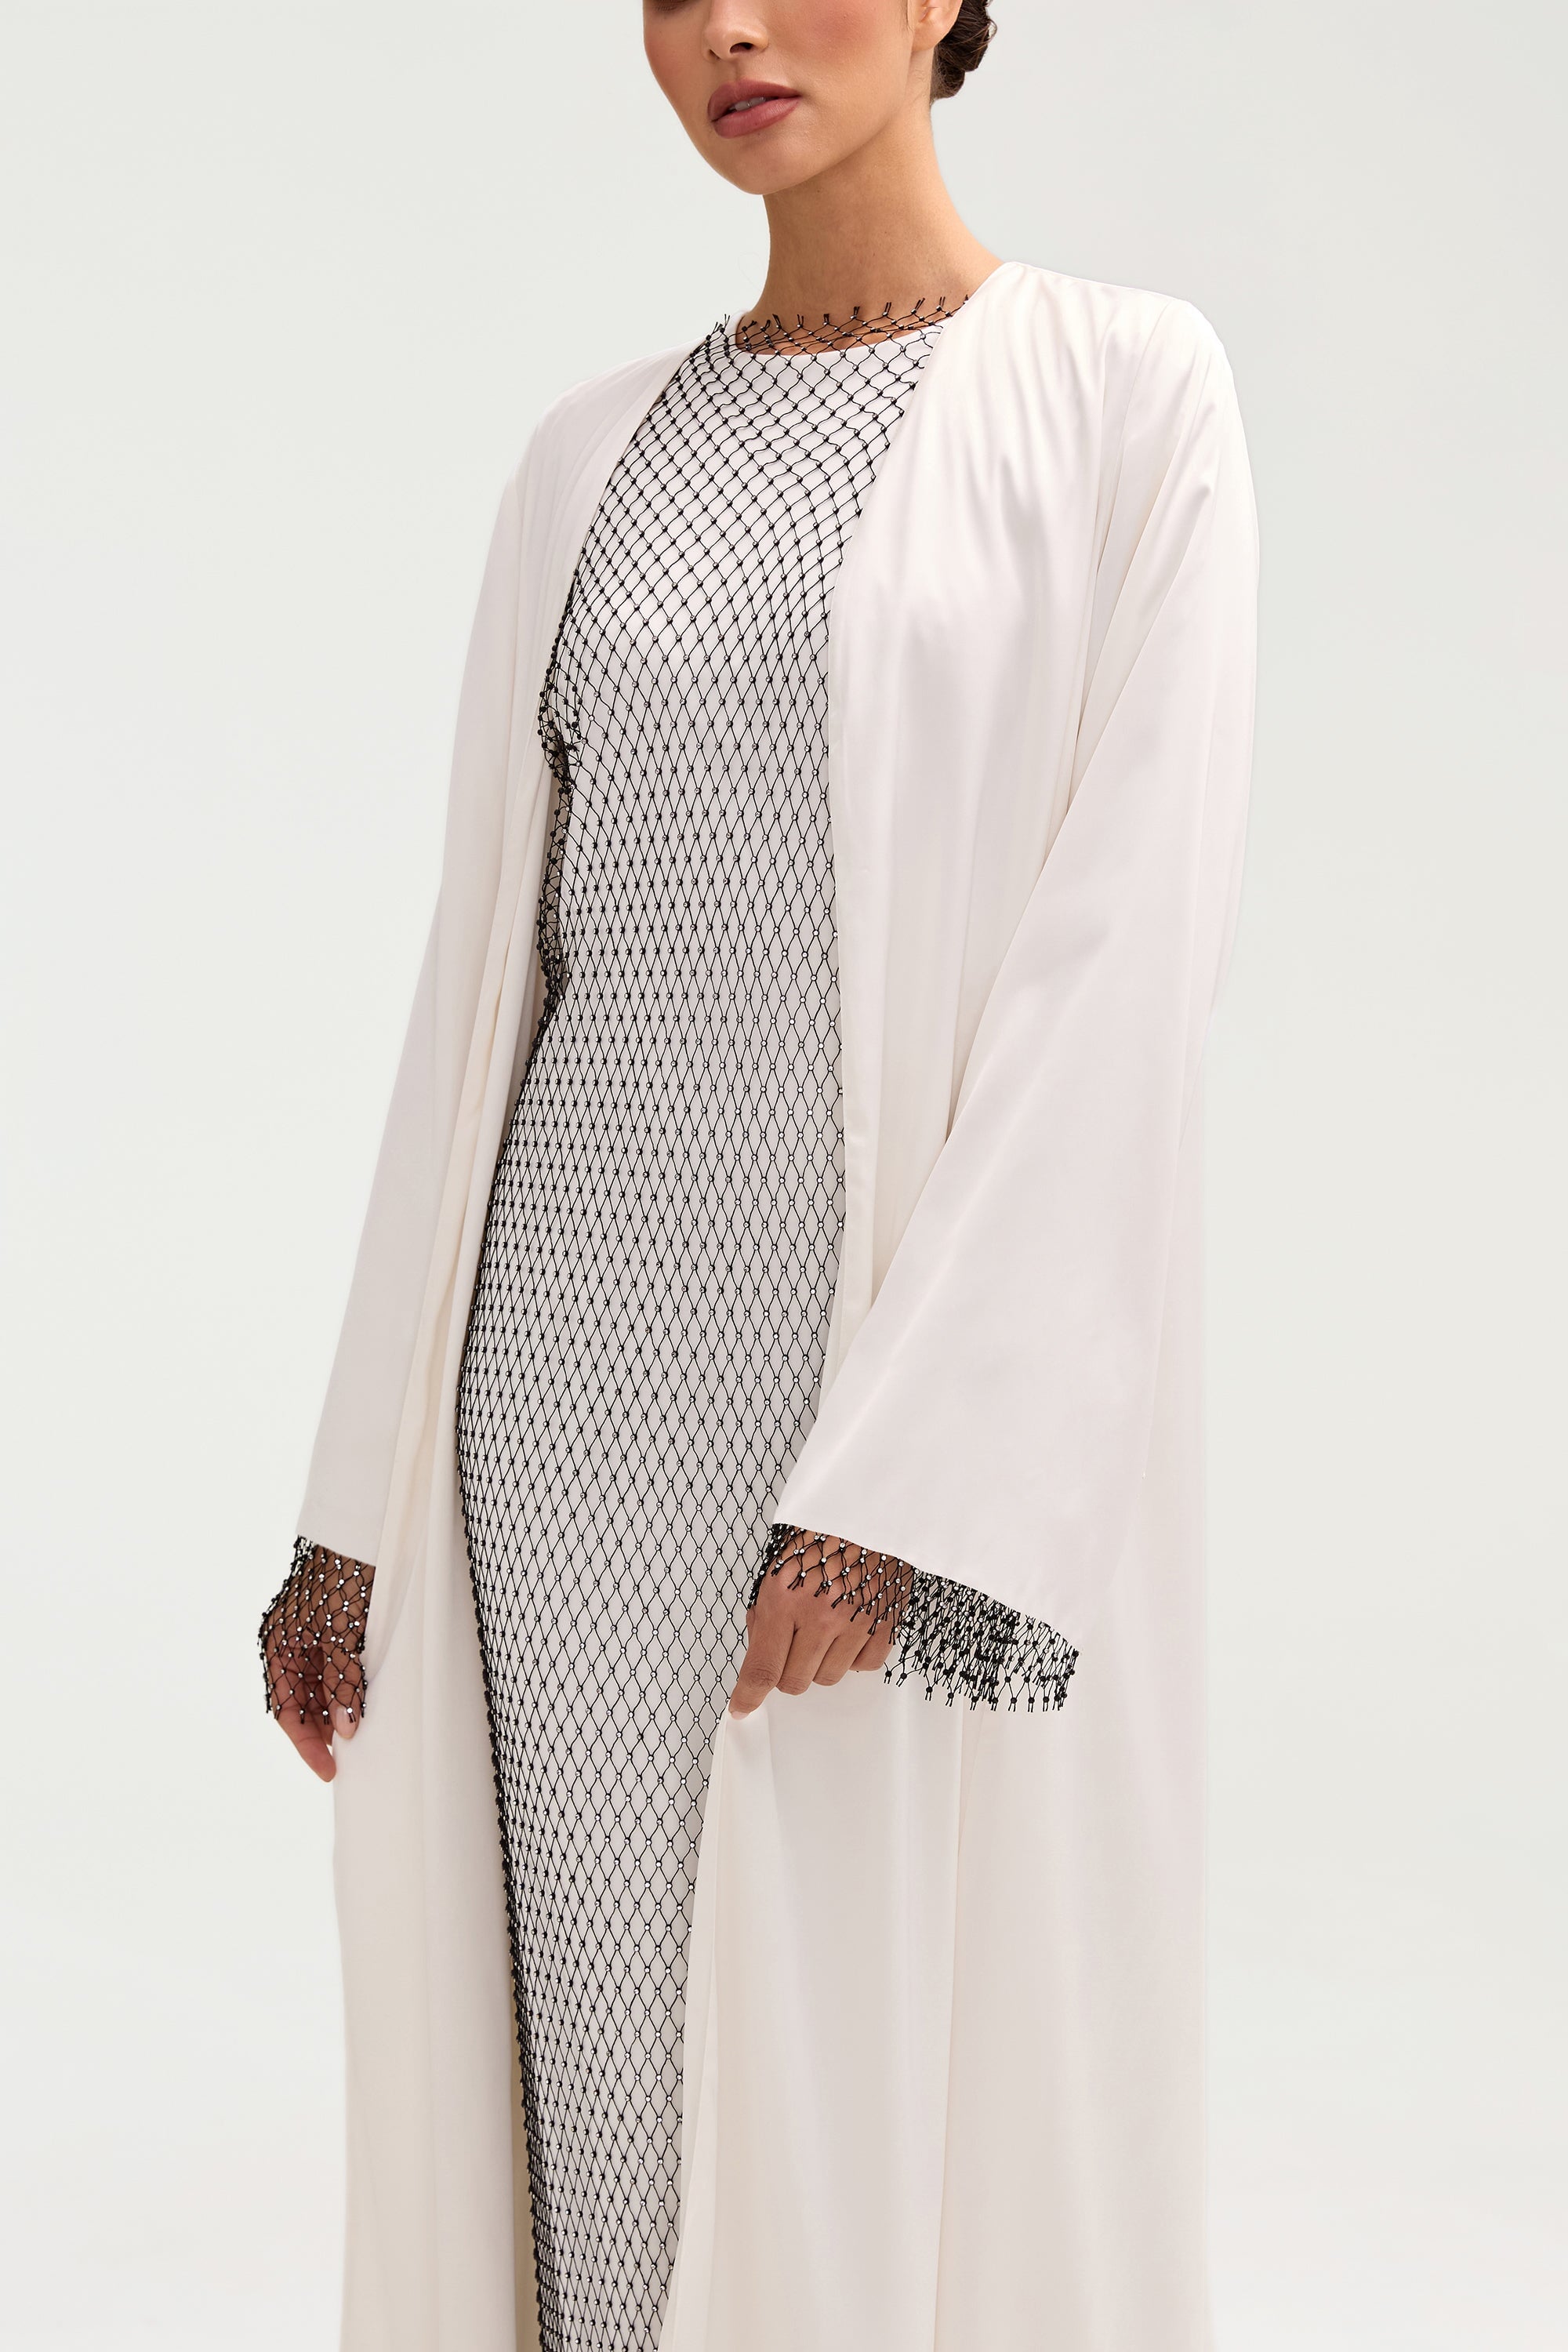 Lyana Crystal Mesh Satin Abaya - White Clothing Veiled 